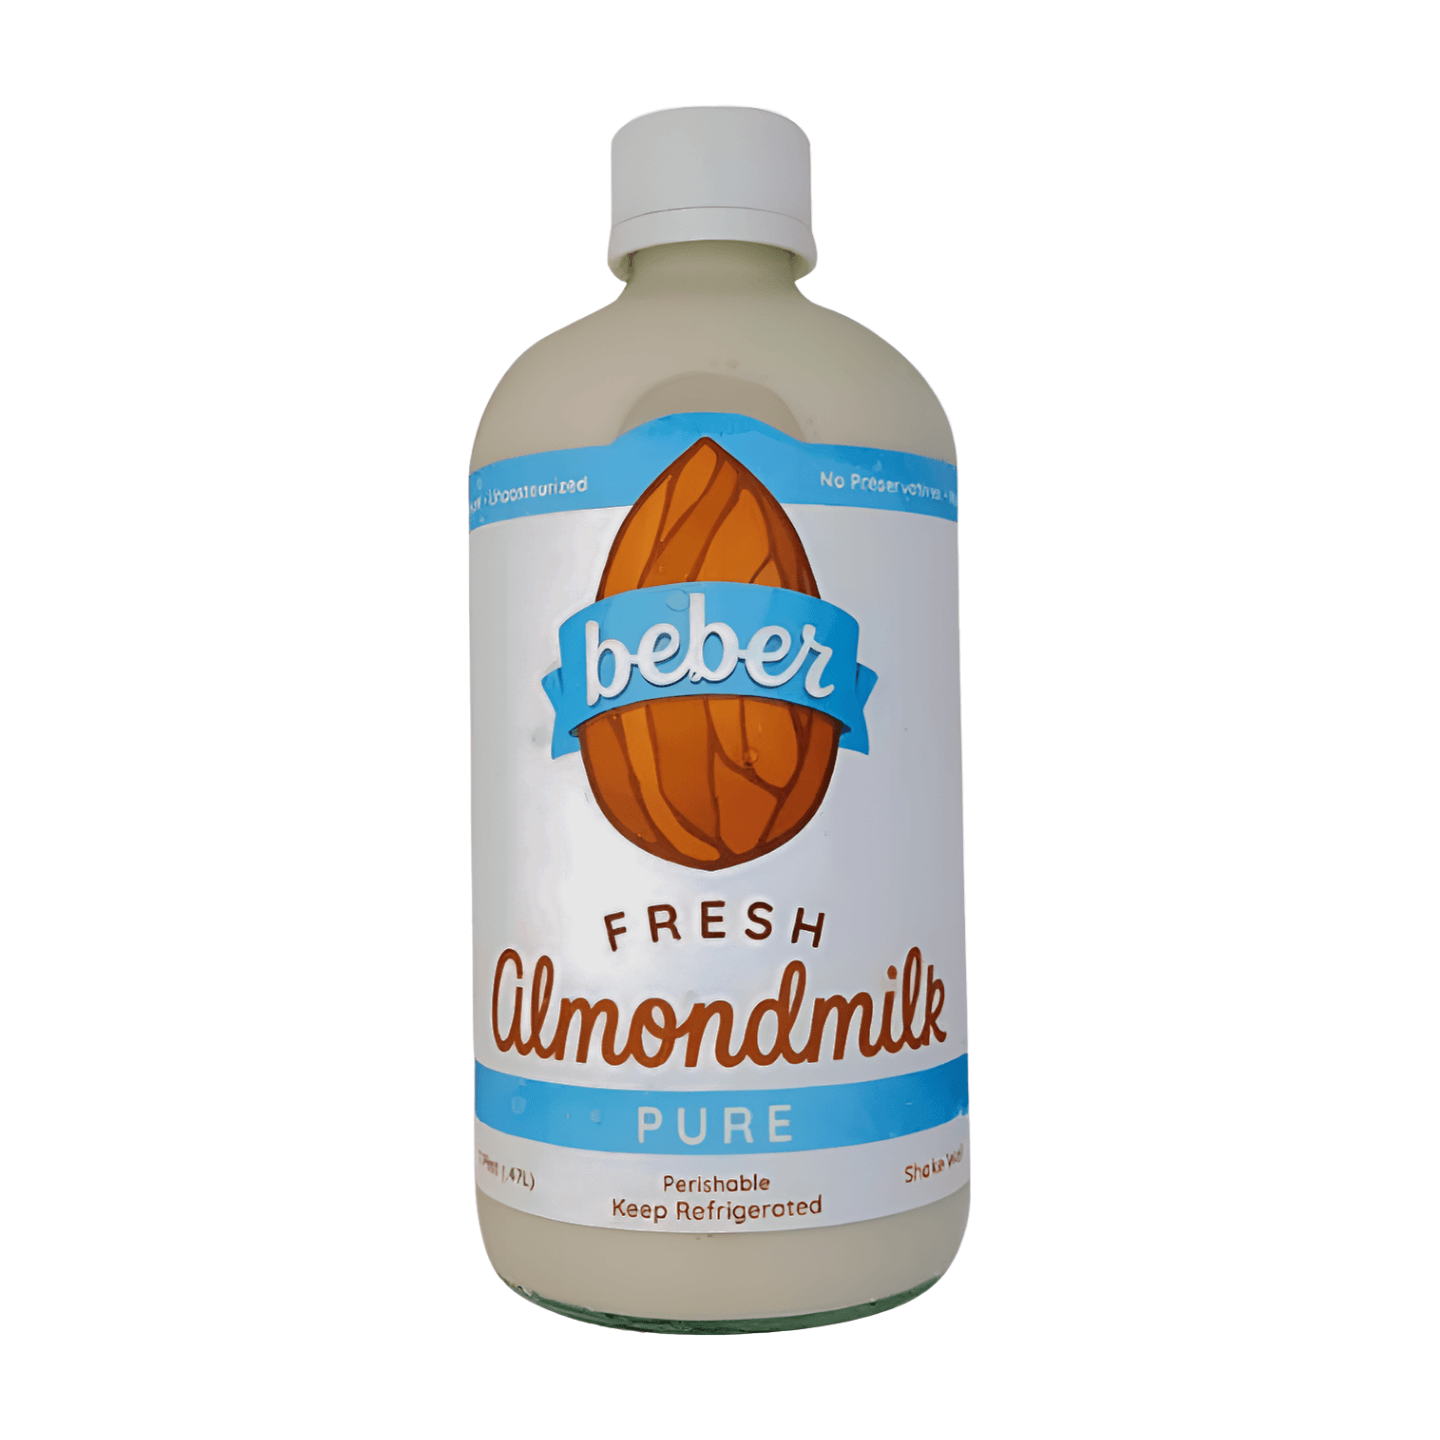 Beber Unsweetened Almondmilk